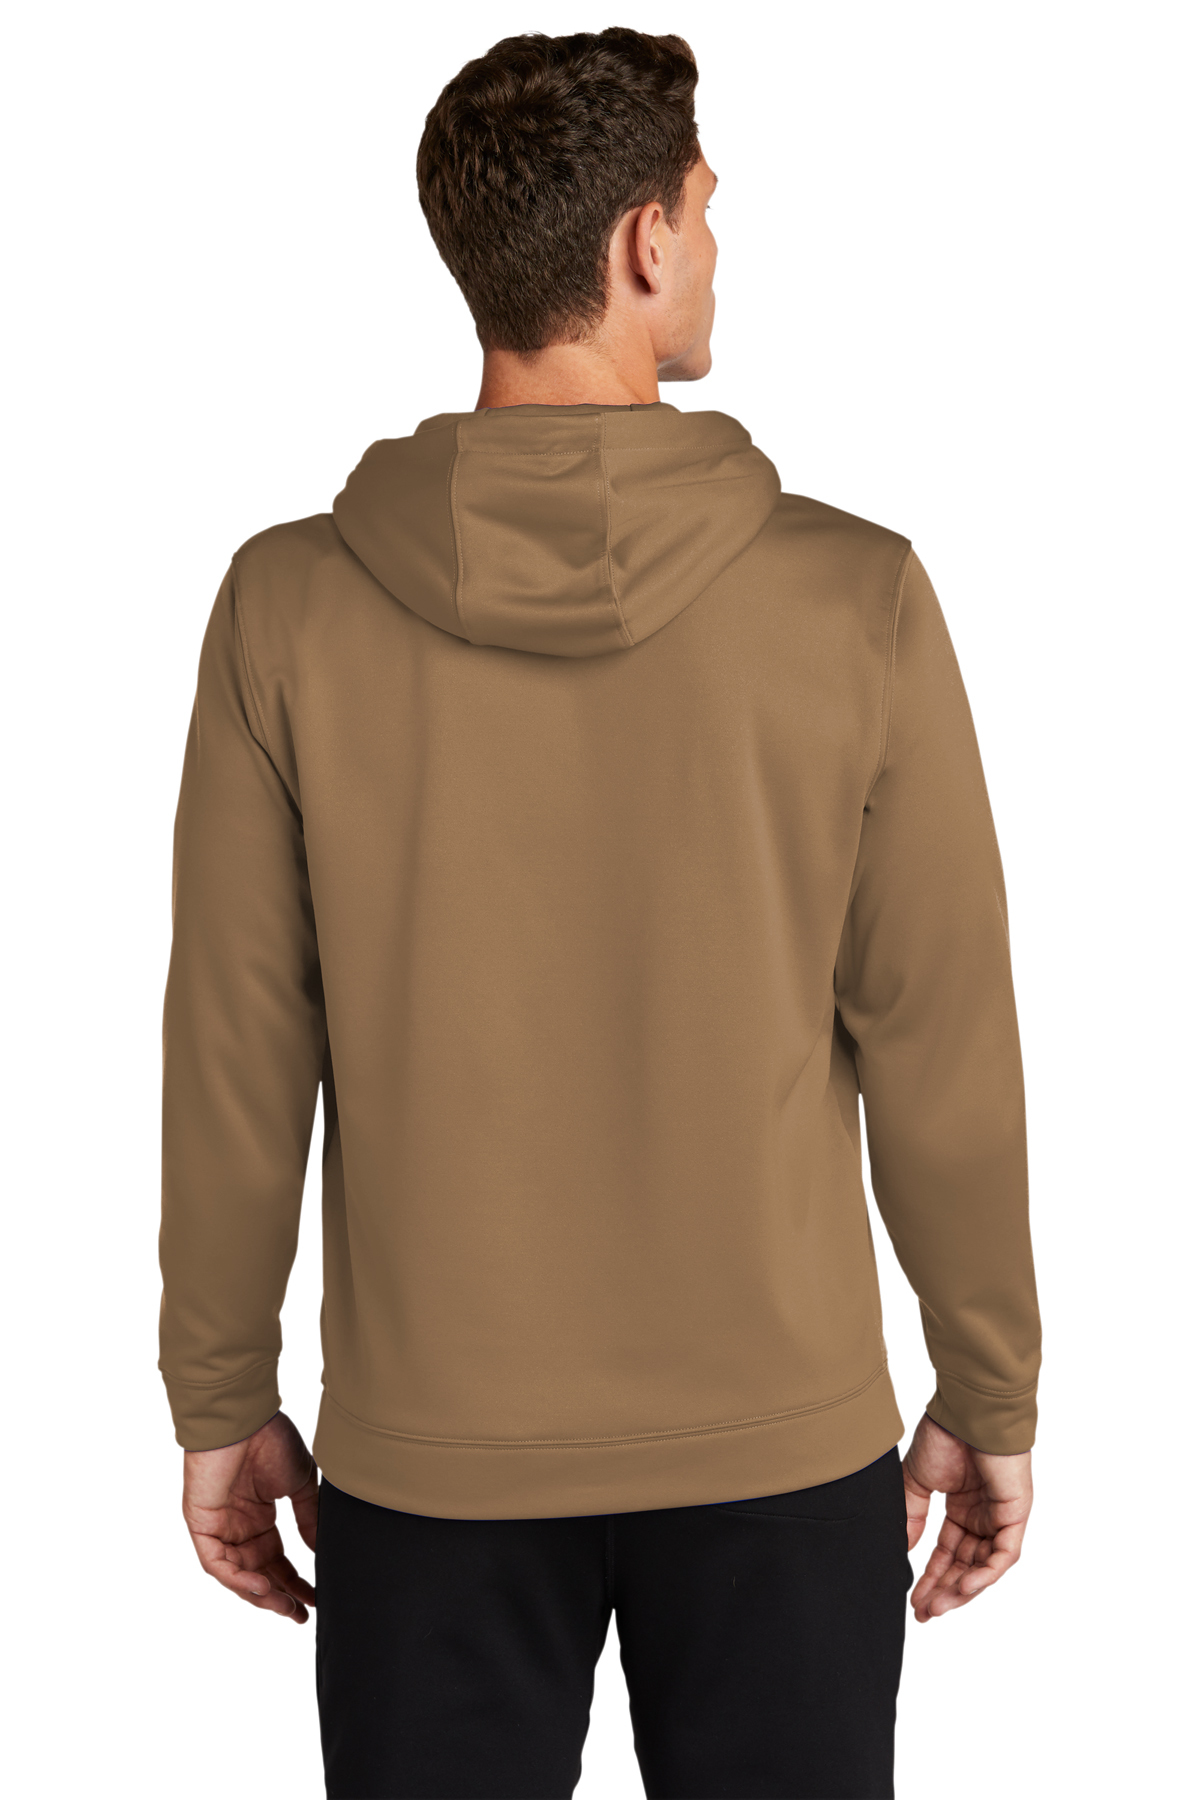 Sport-Tek Sport-Wick Fleece Hooded Pullover | Product | Sport-Tek